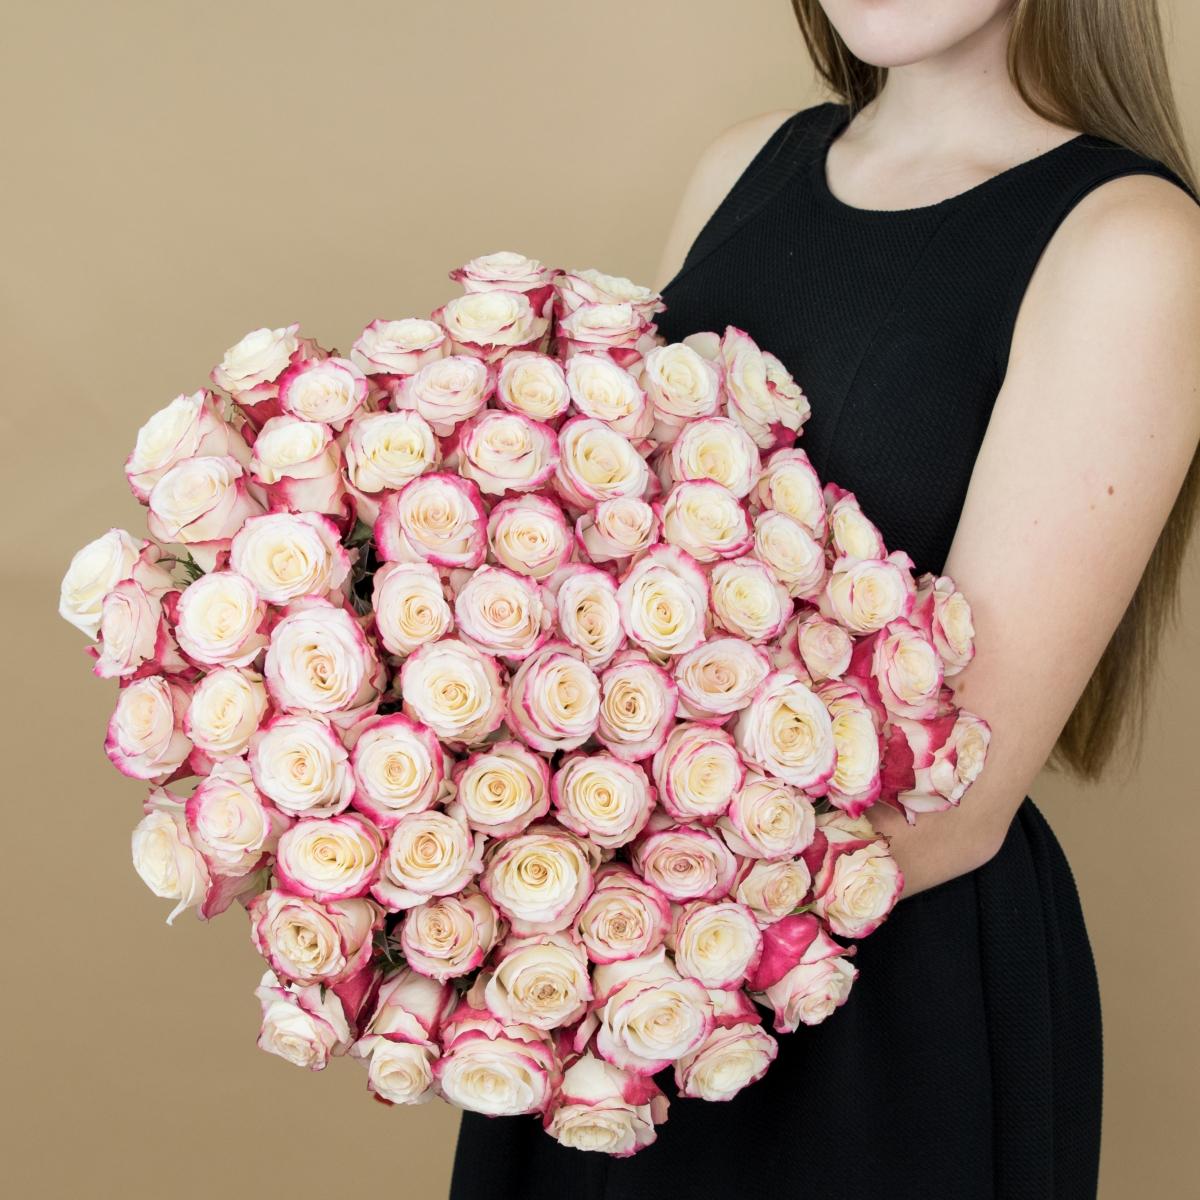 Розы красно-белые (40 см) Эквадор артикул букета  498